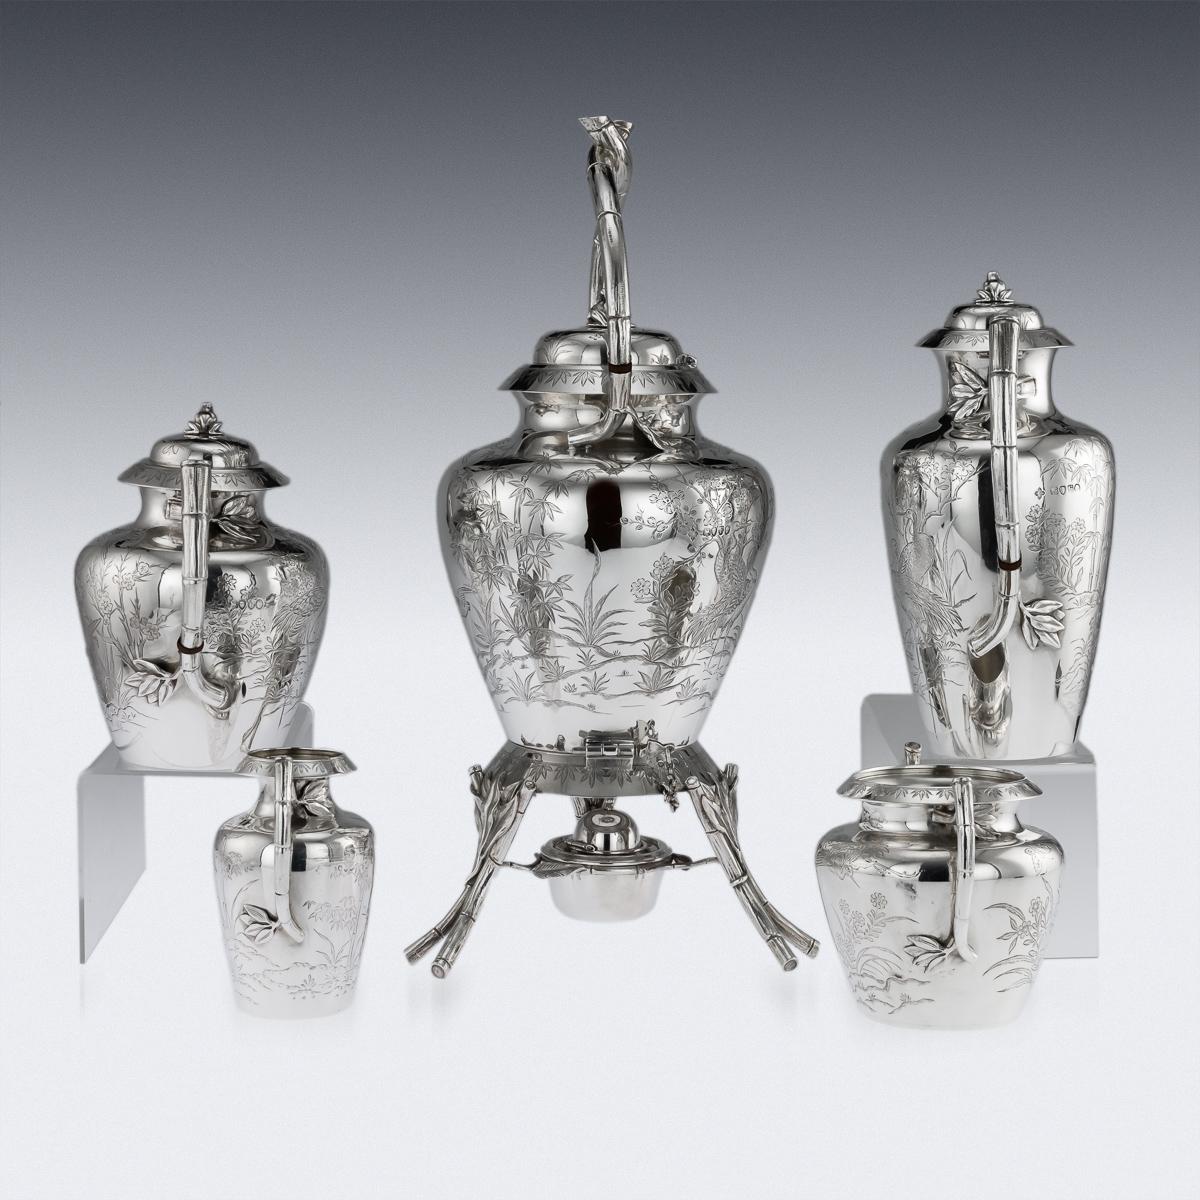 Viktorianisches Aesthetic Movement Silber Teeservice, 19. Jahrhundert, um 1880 (Englisch) im Angebot